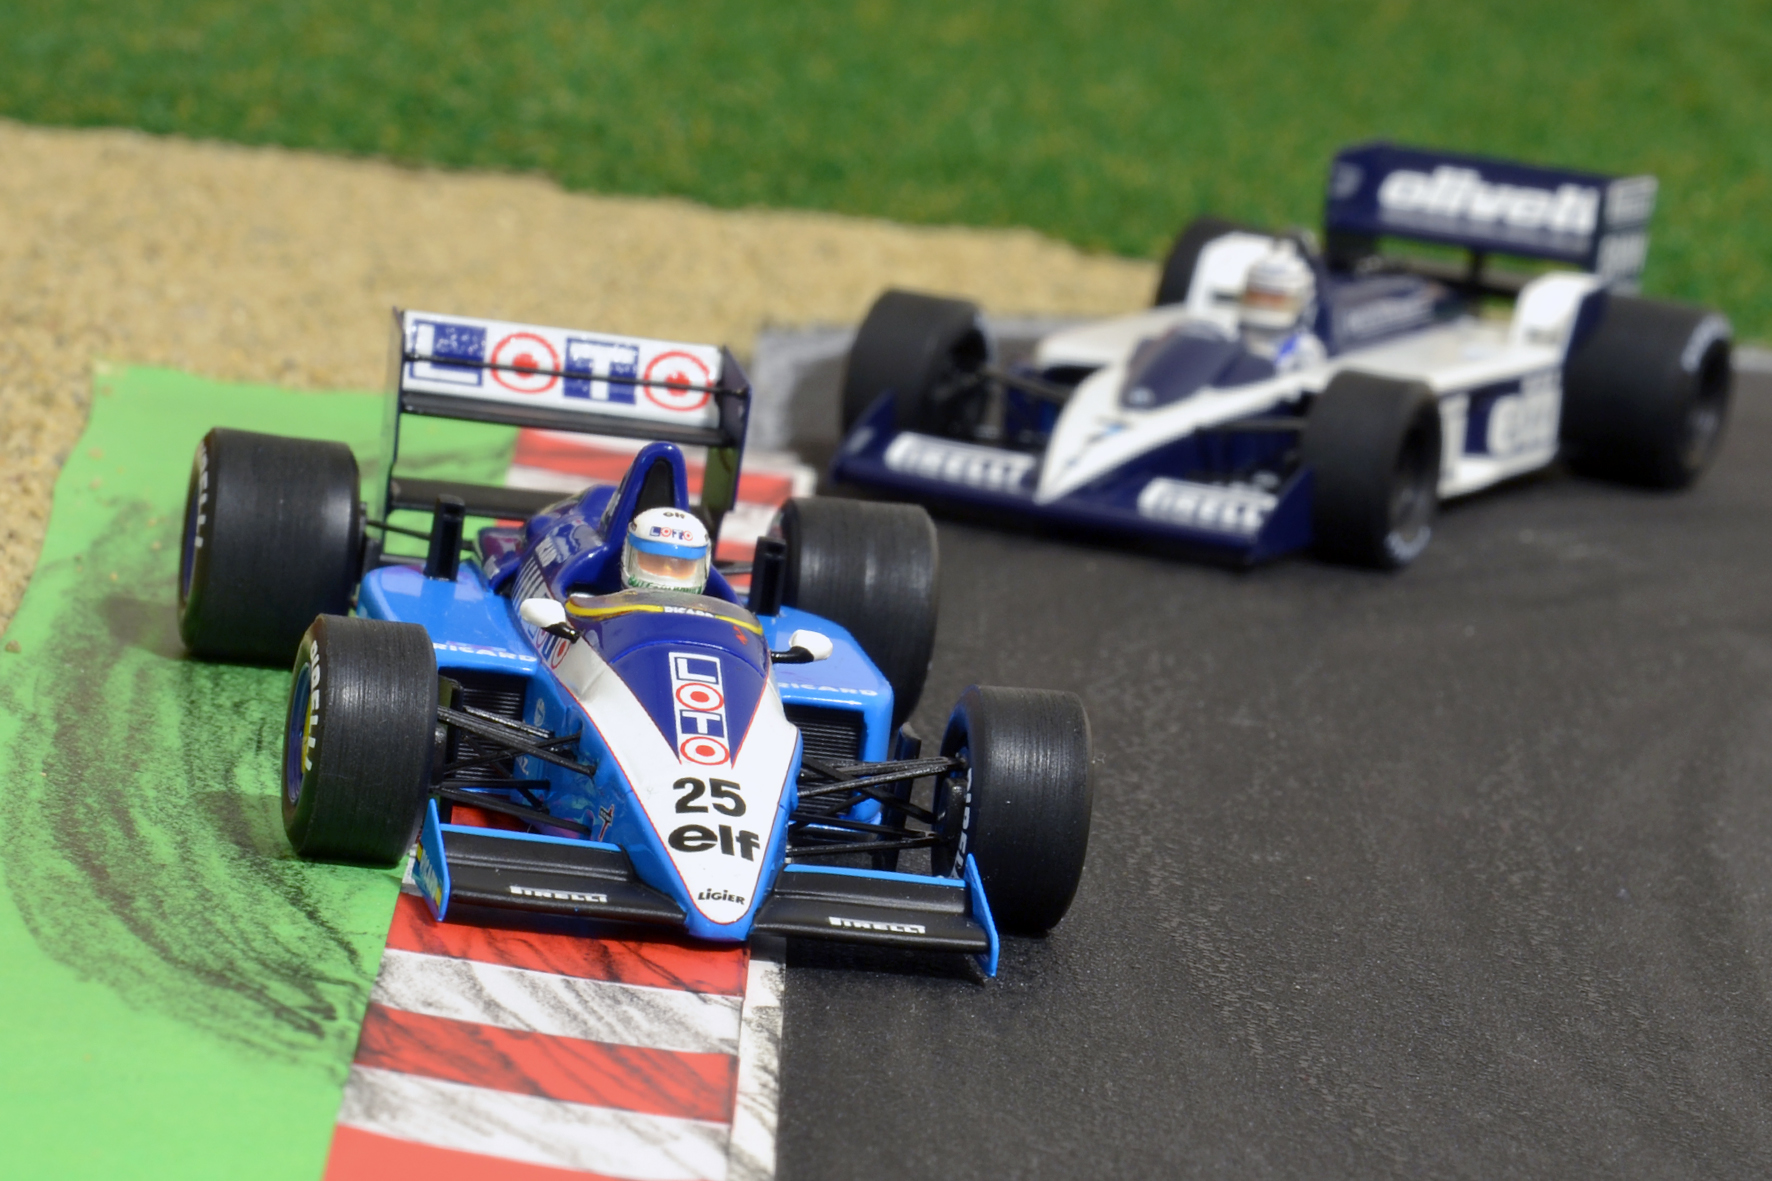 Ligier JS27 René Arnoux 1986 & Brabham BT55 Ricardo Patrese 1986 - Spark 1:43